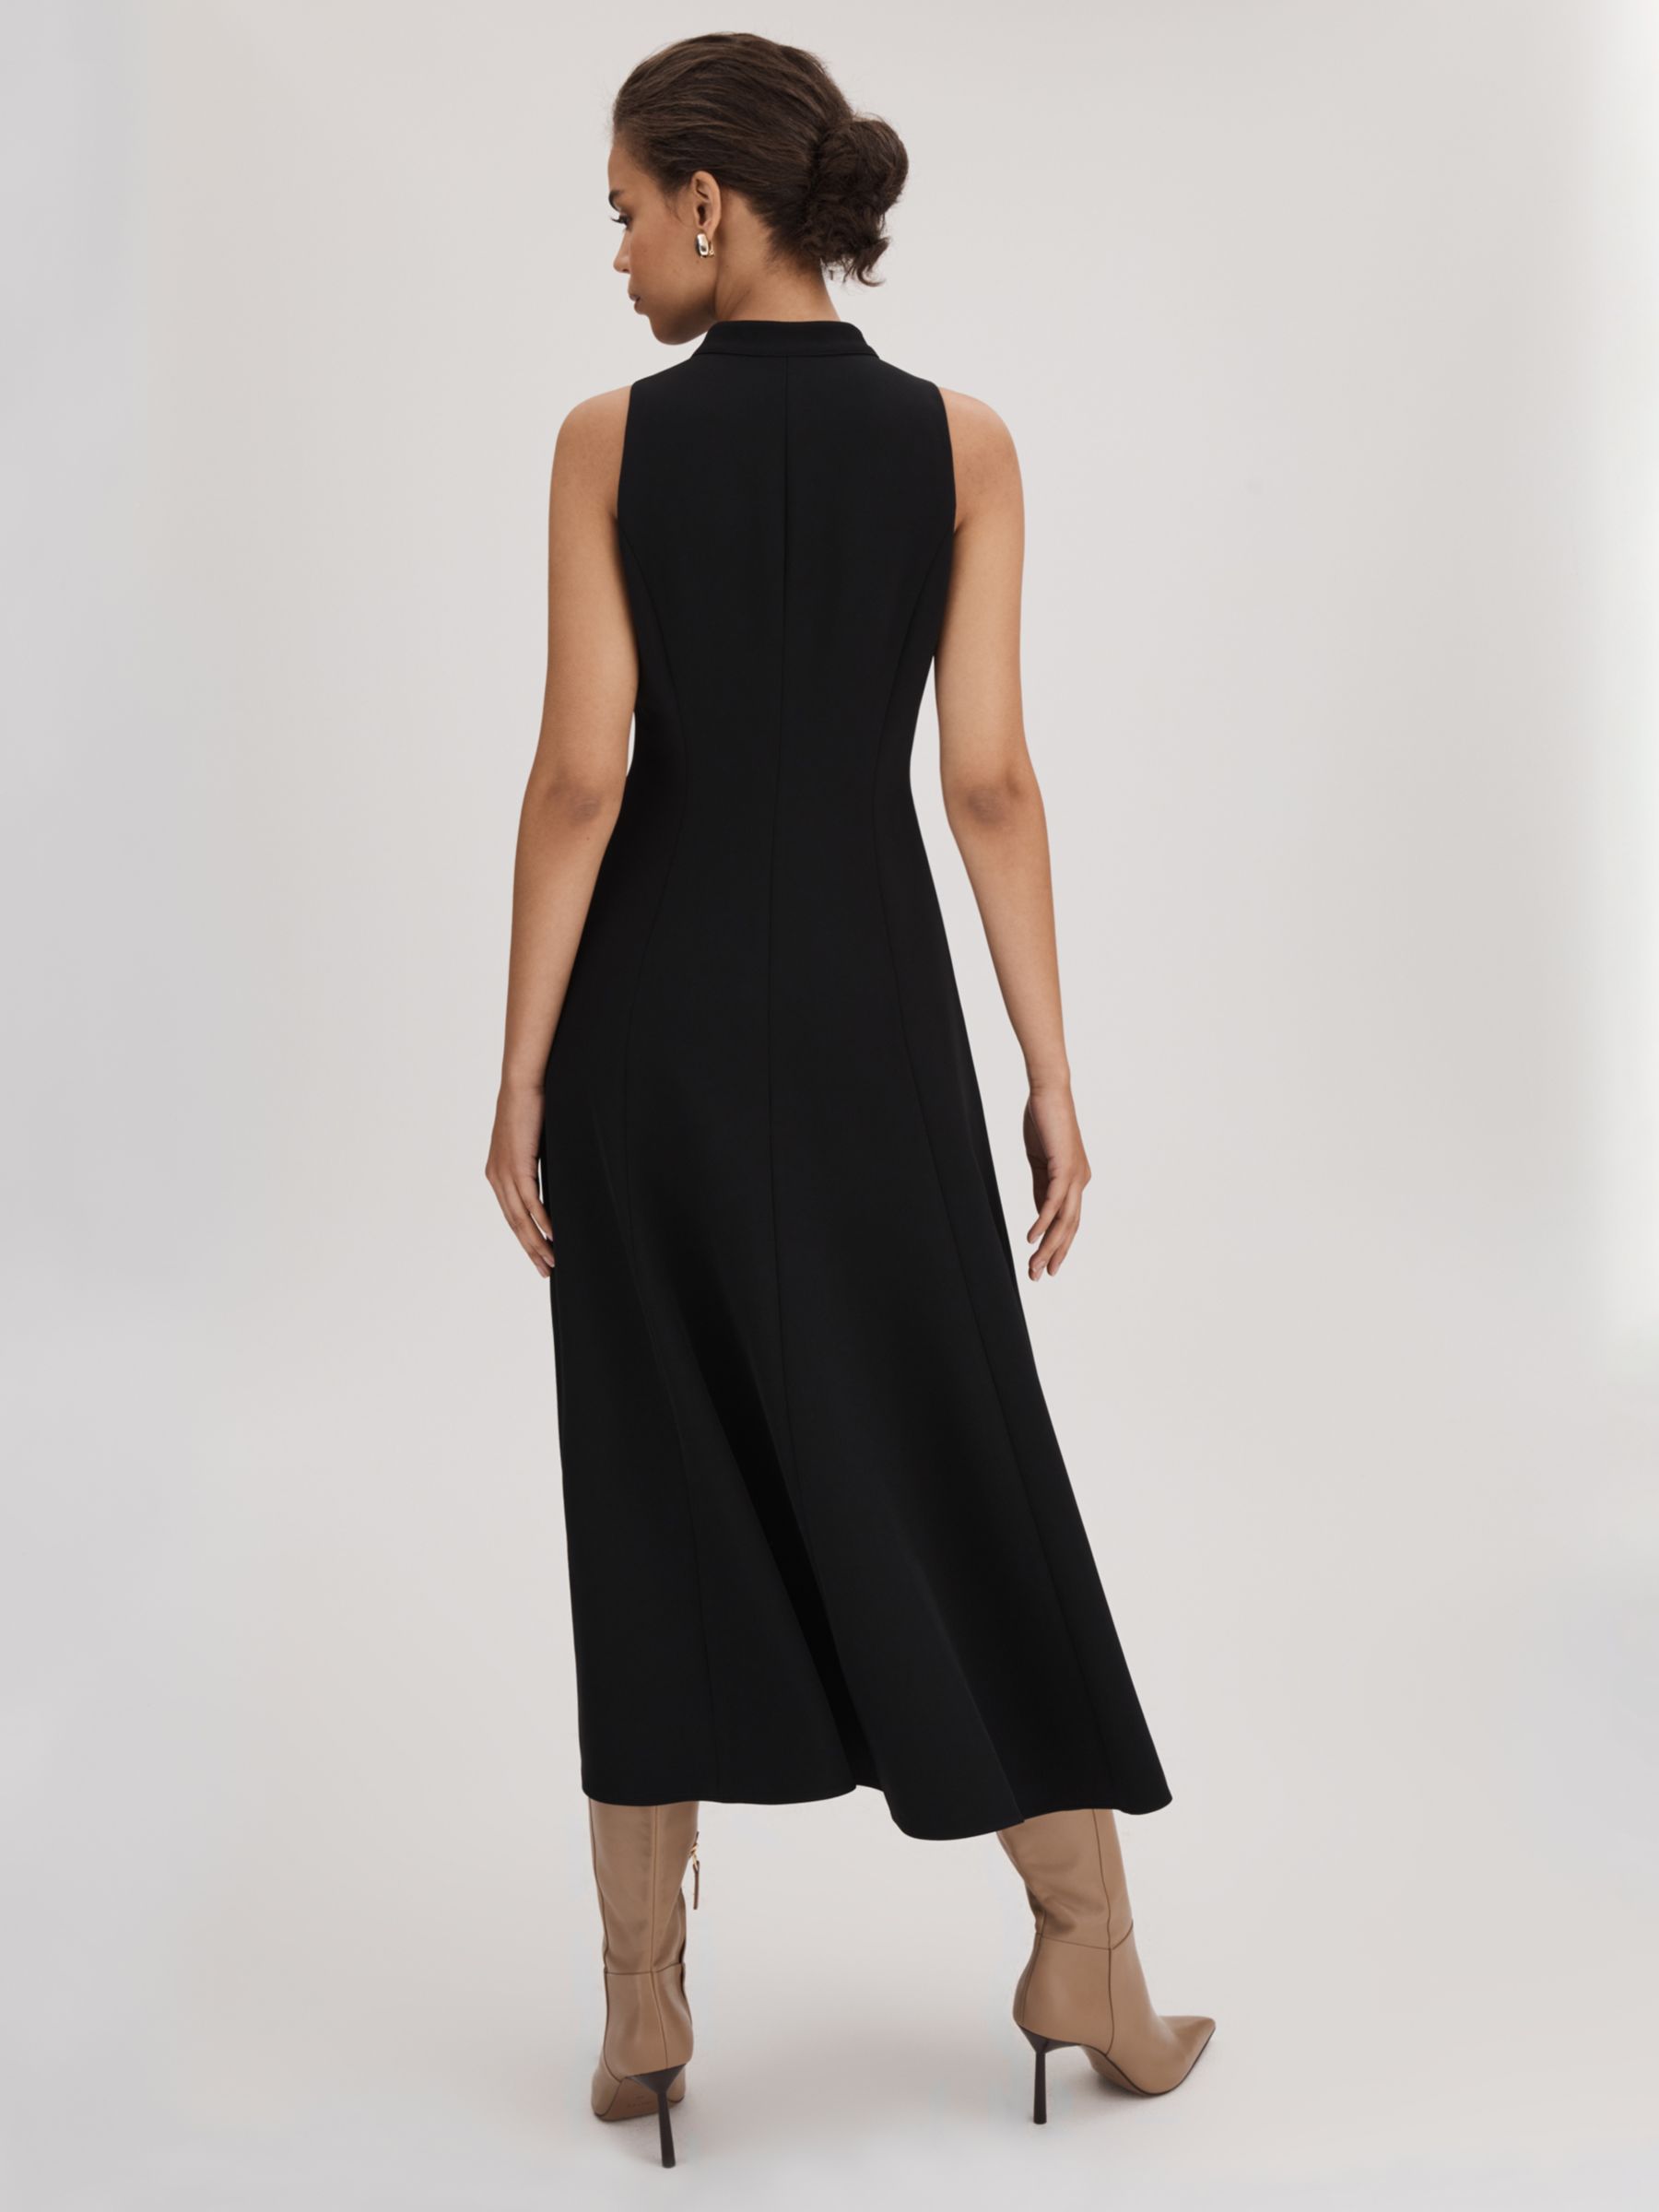 FLORERE Zip Front Midi Dress, Black at John Lewis & Partners